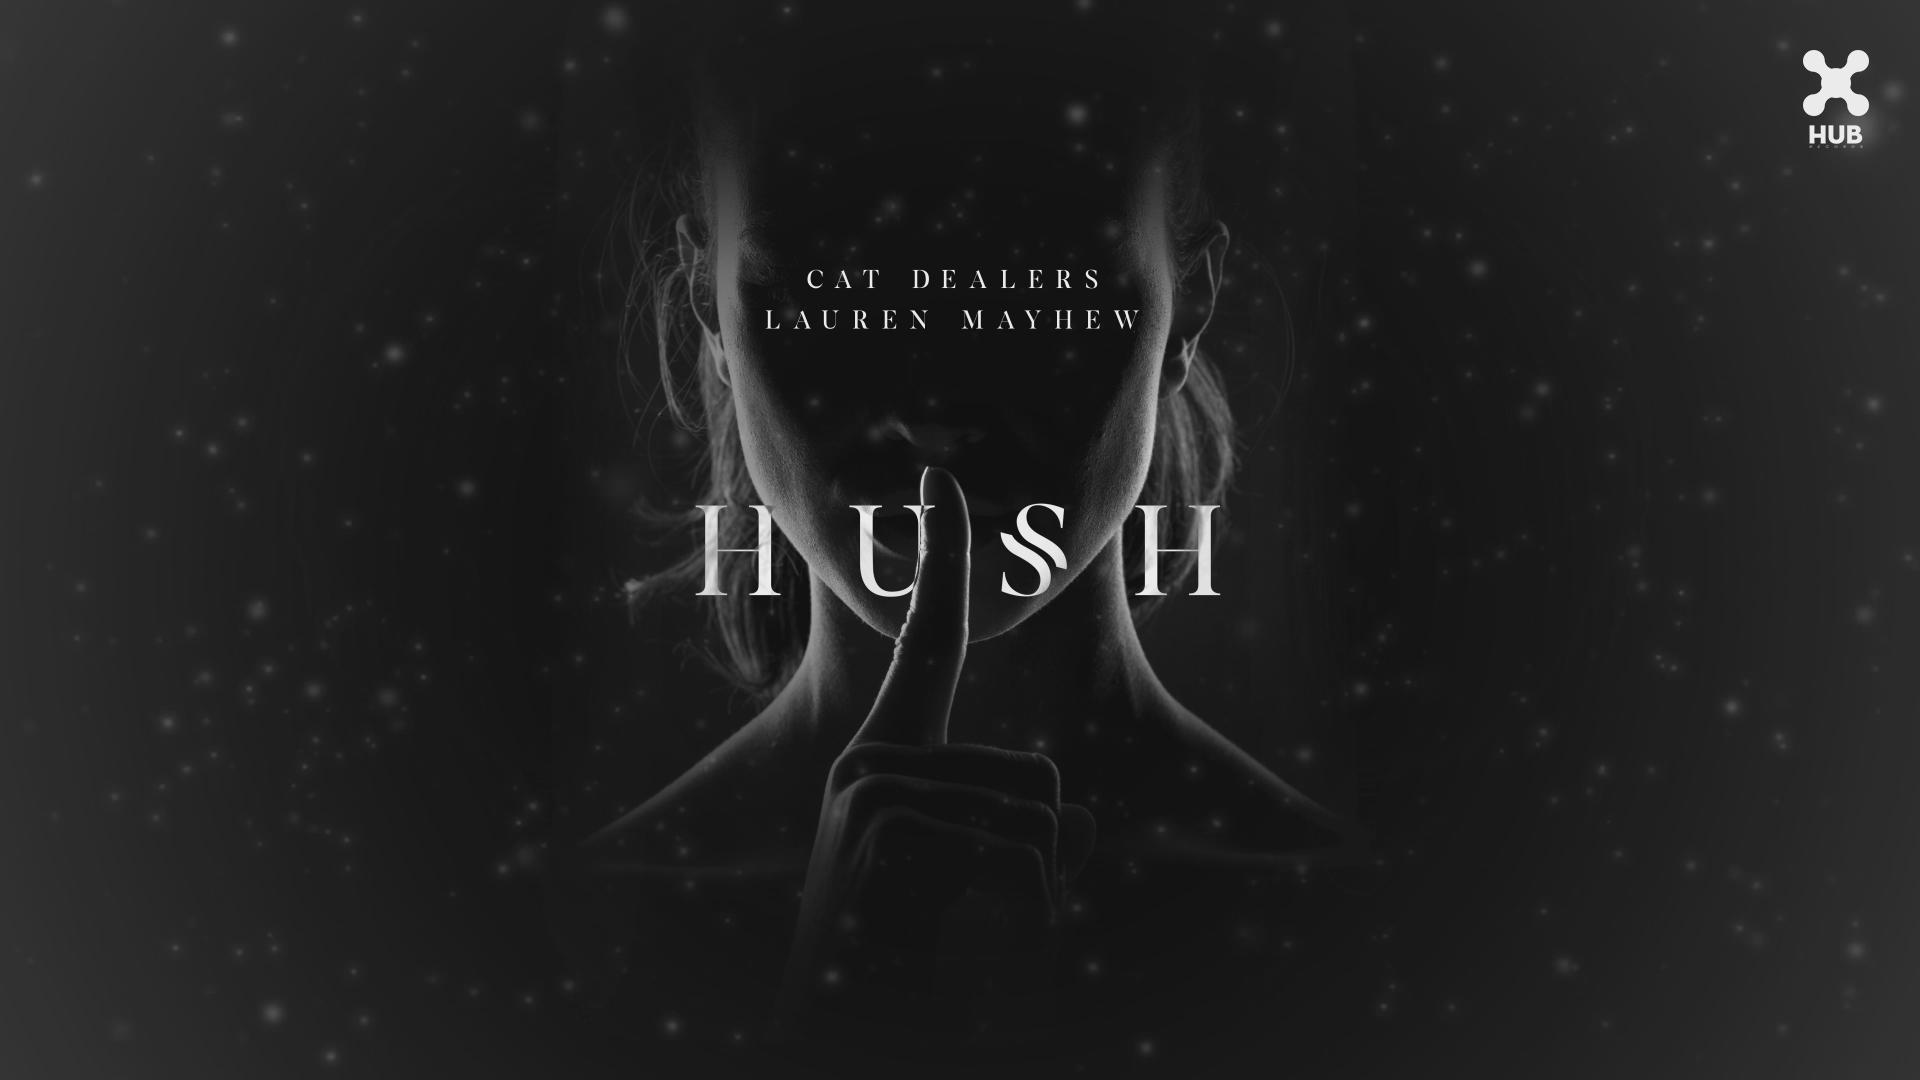 Cat Dealers - Hush (Pseudo Video)